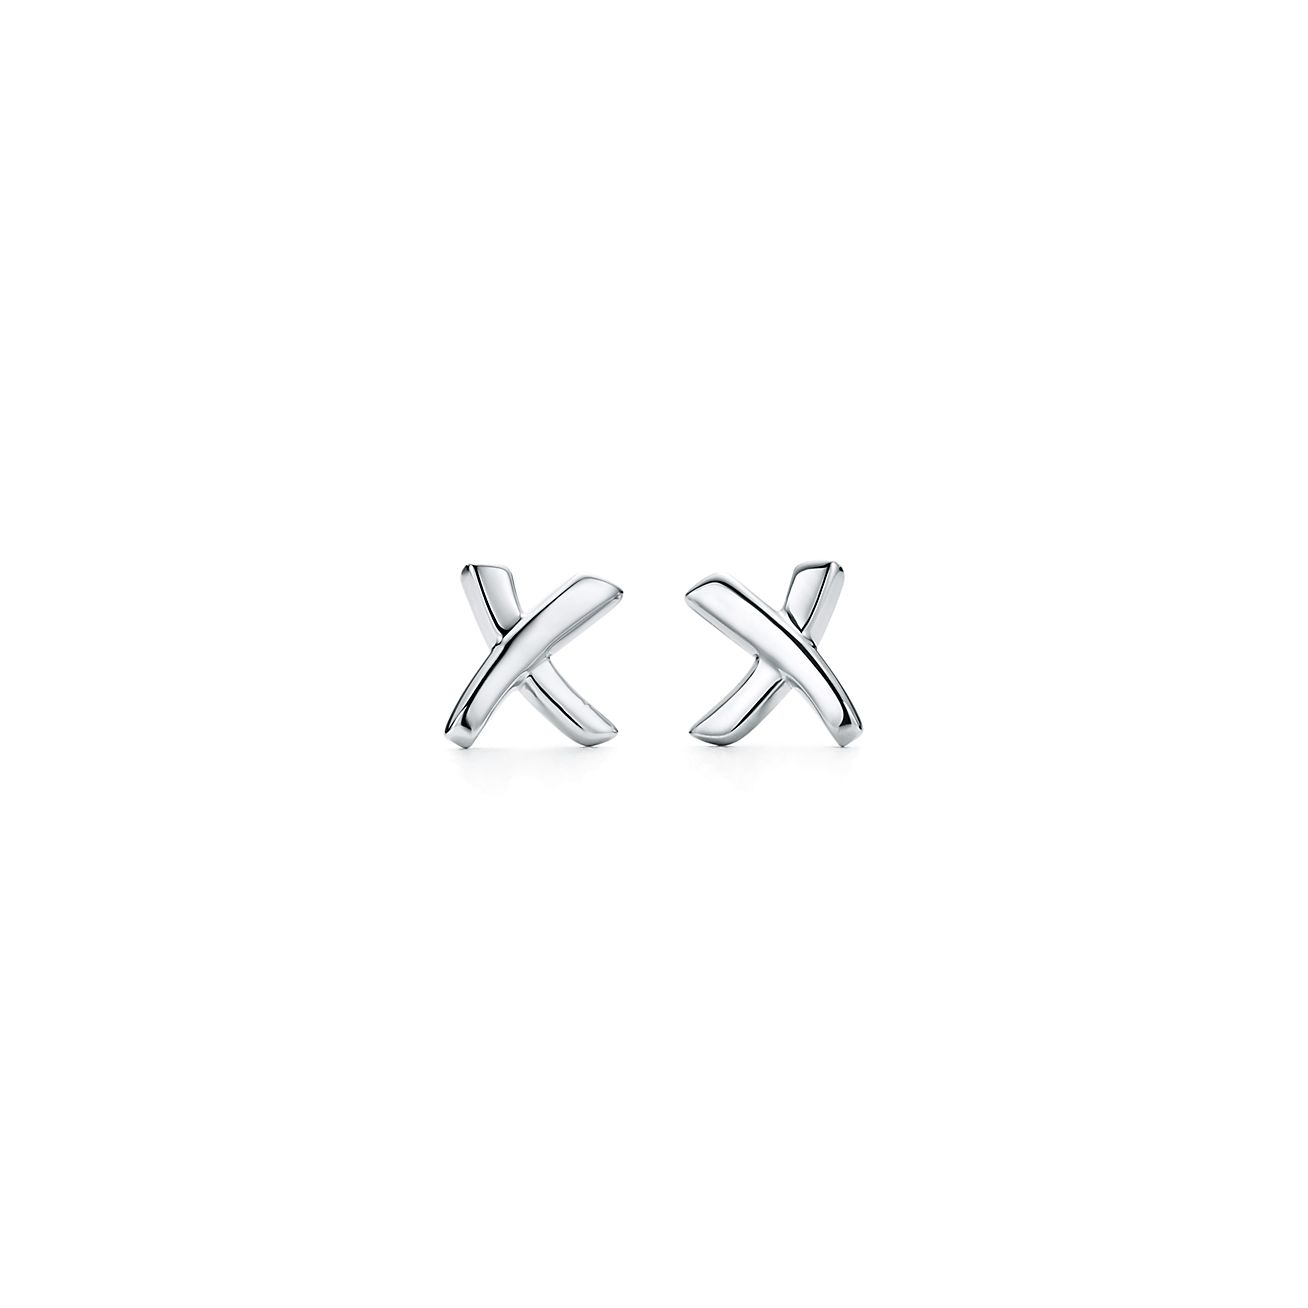 Paloma's Graffiti X earrings in sterling silver, small. | Tiffany & Co.